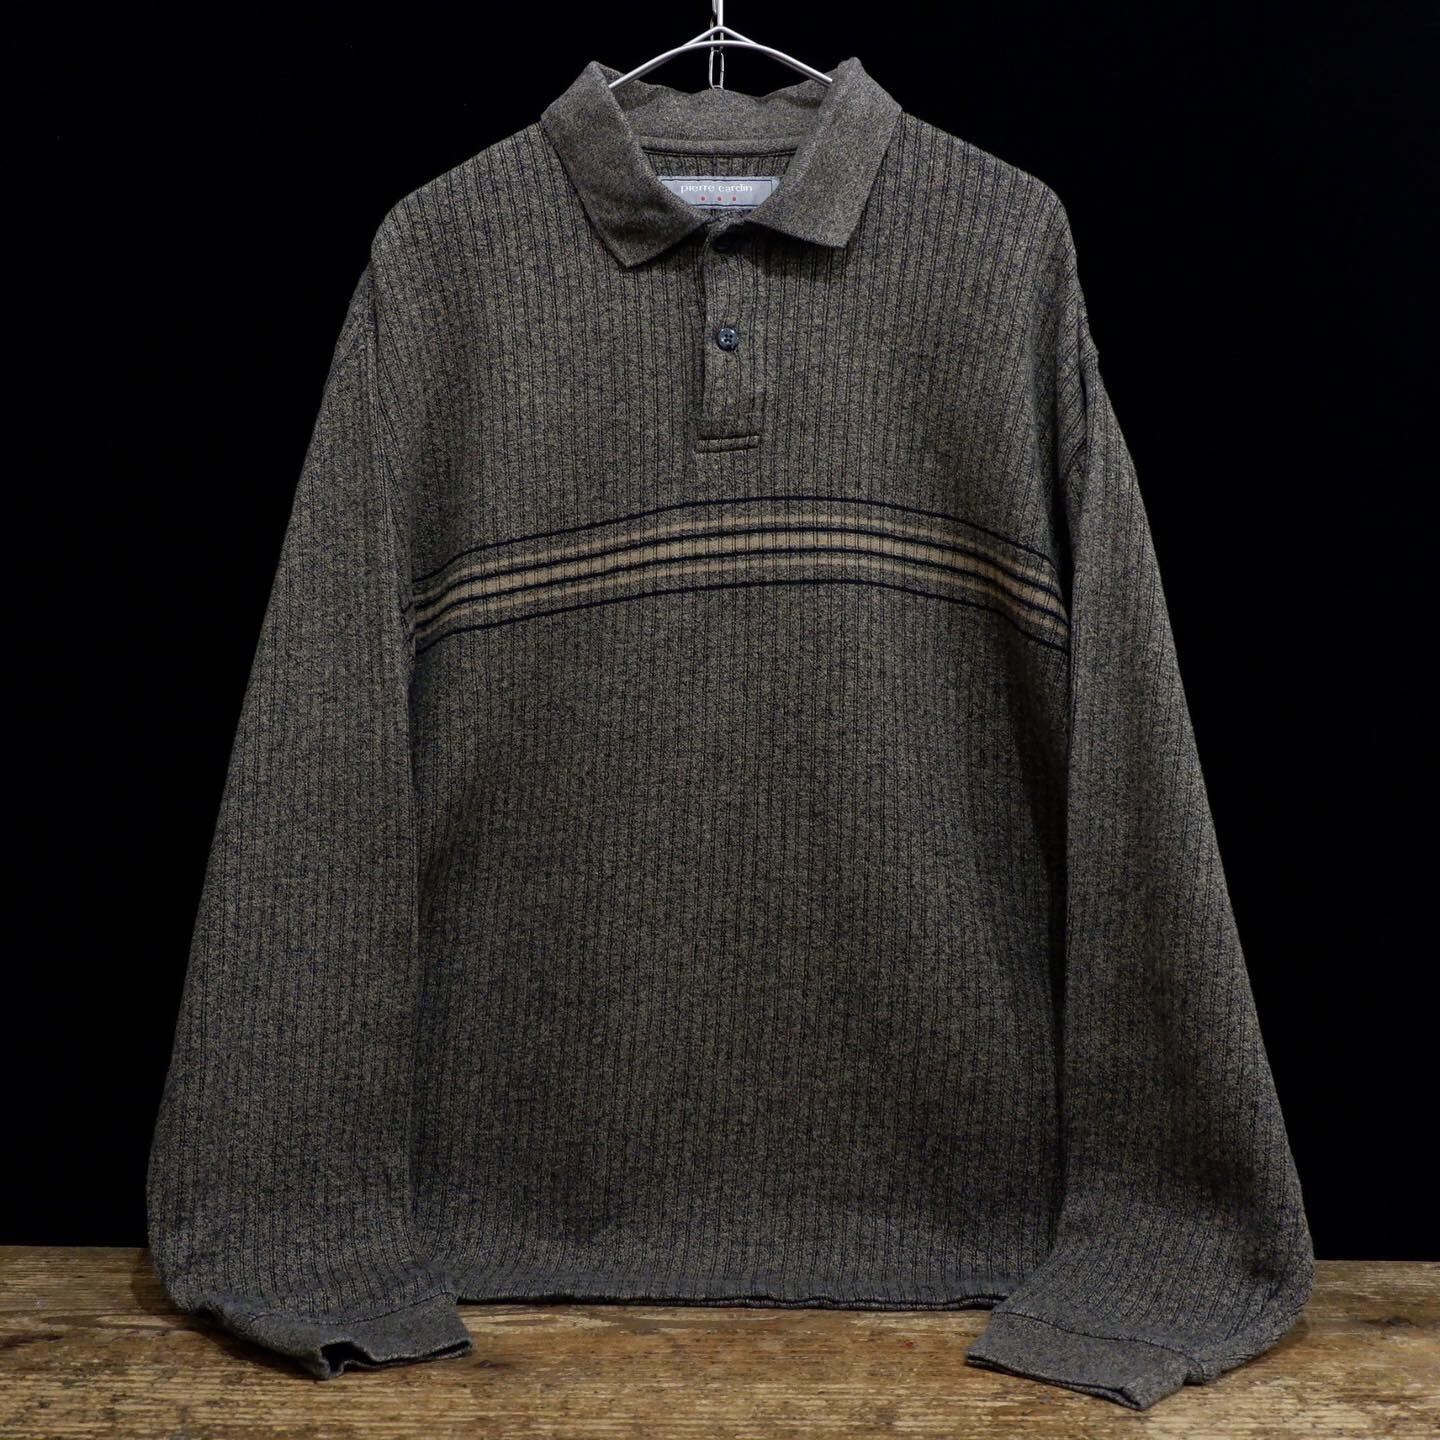 "Pierre Cardin" L/S polo shirt